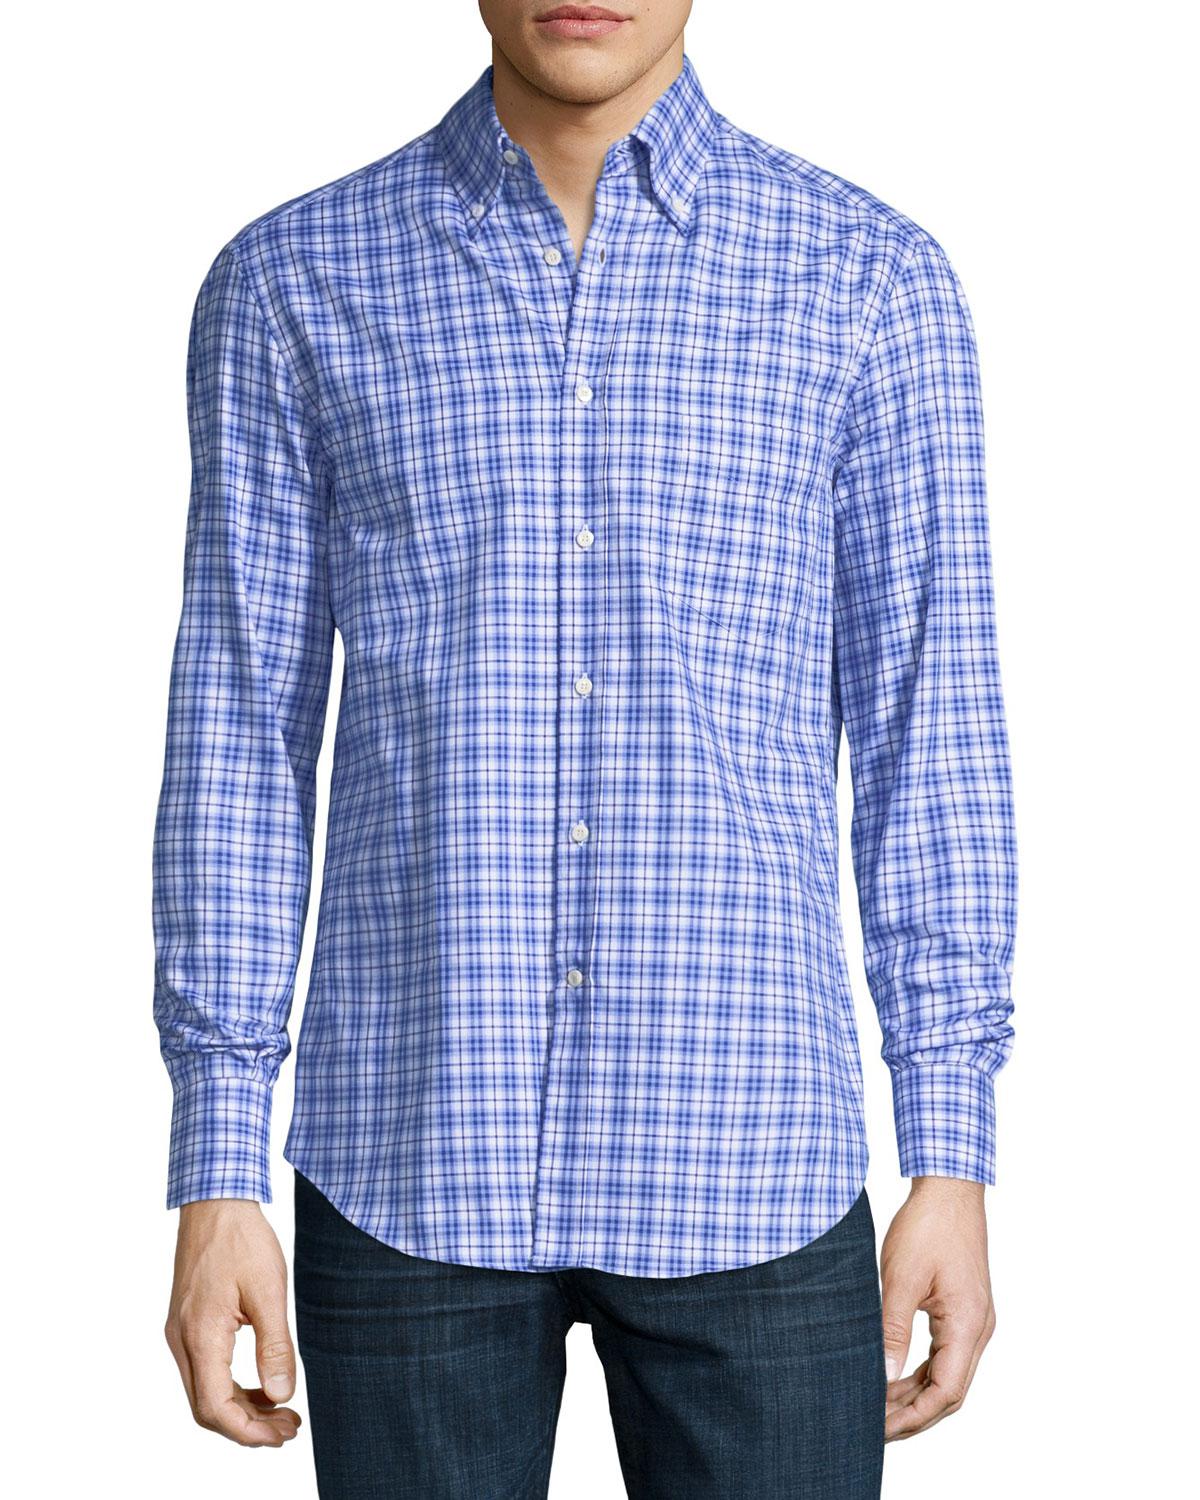 Brunello Cucinelli Panama Check Cotton Sport Shirt in Blue for Men - Lyst